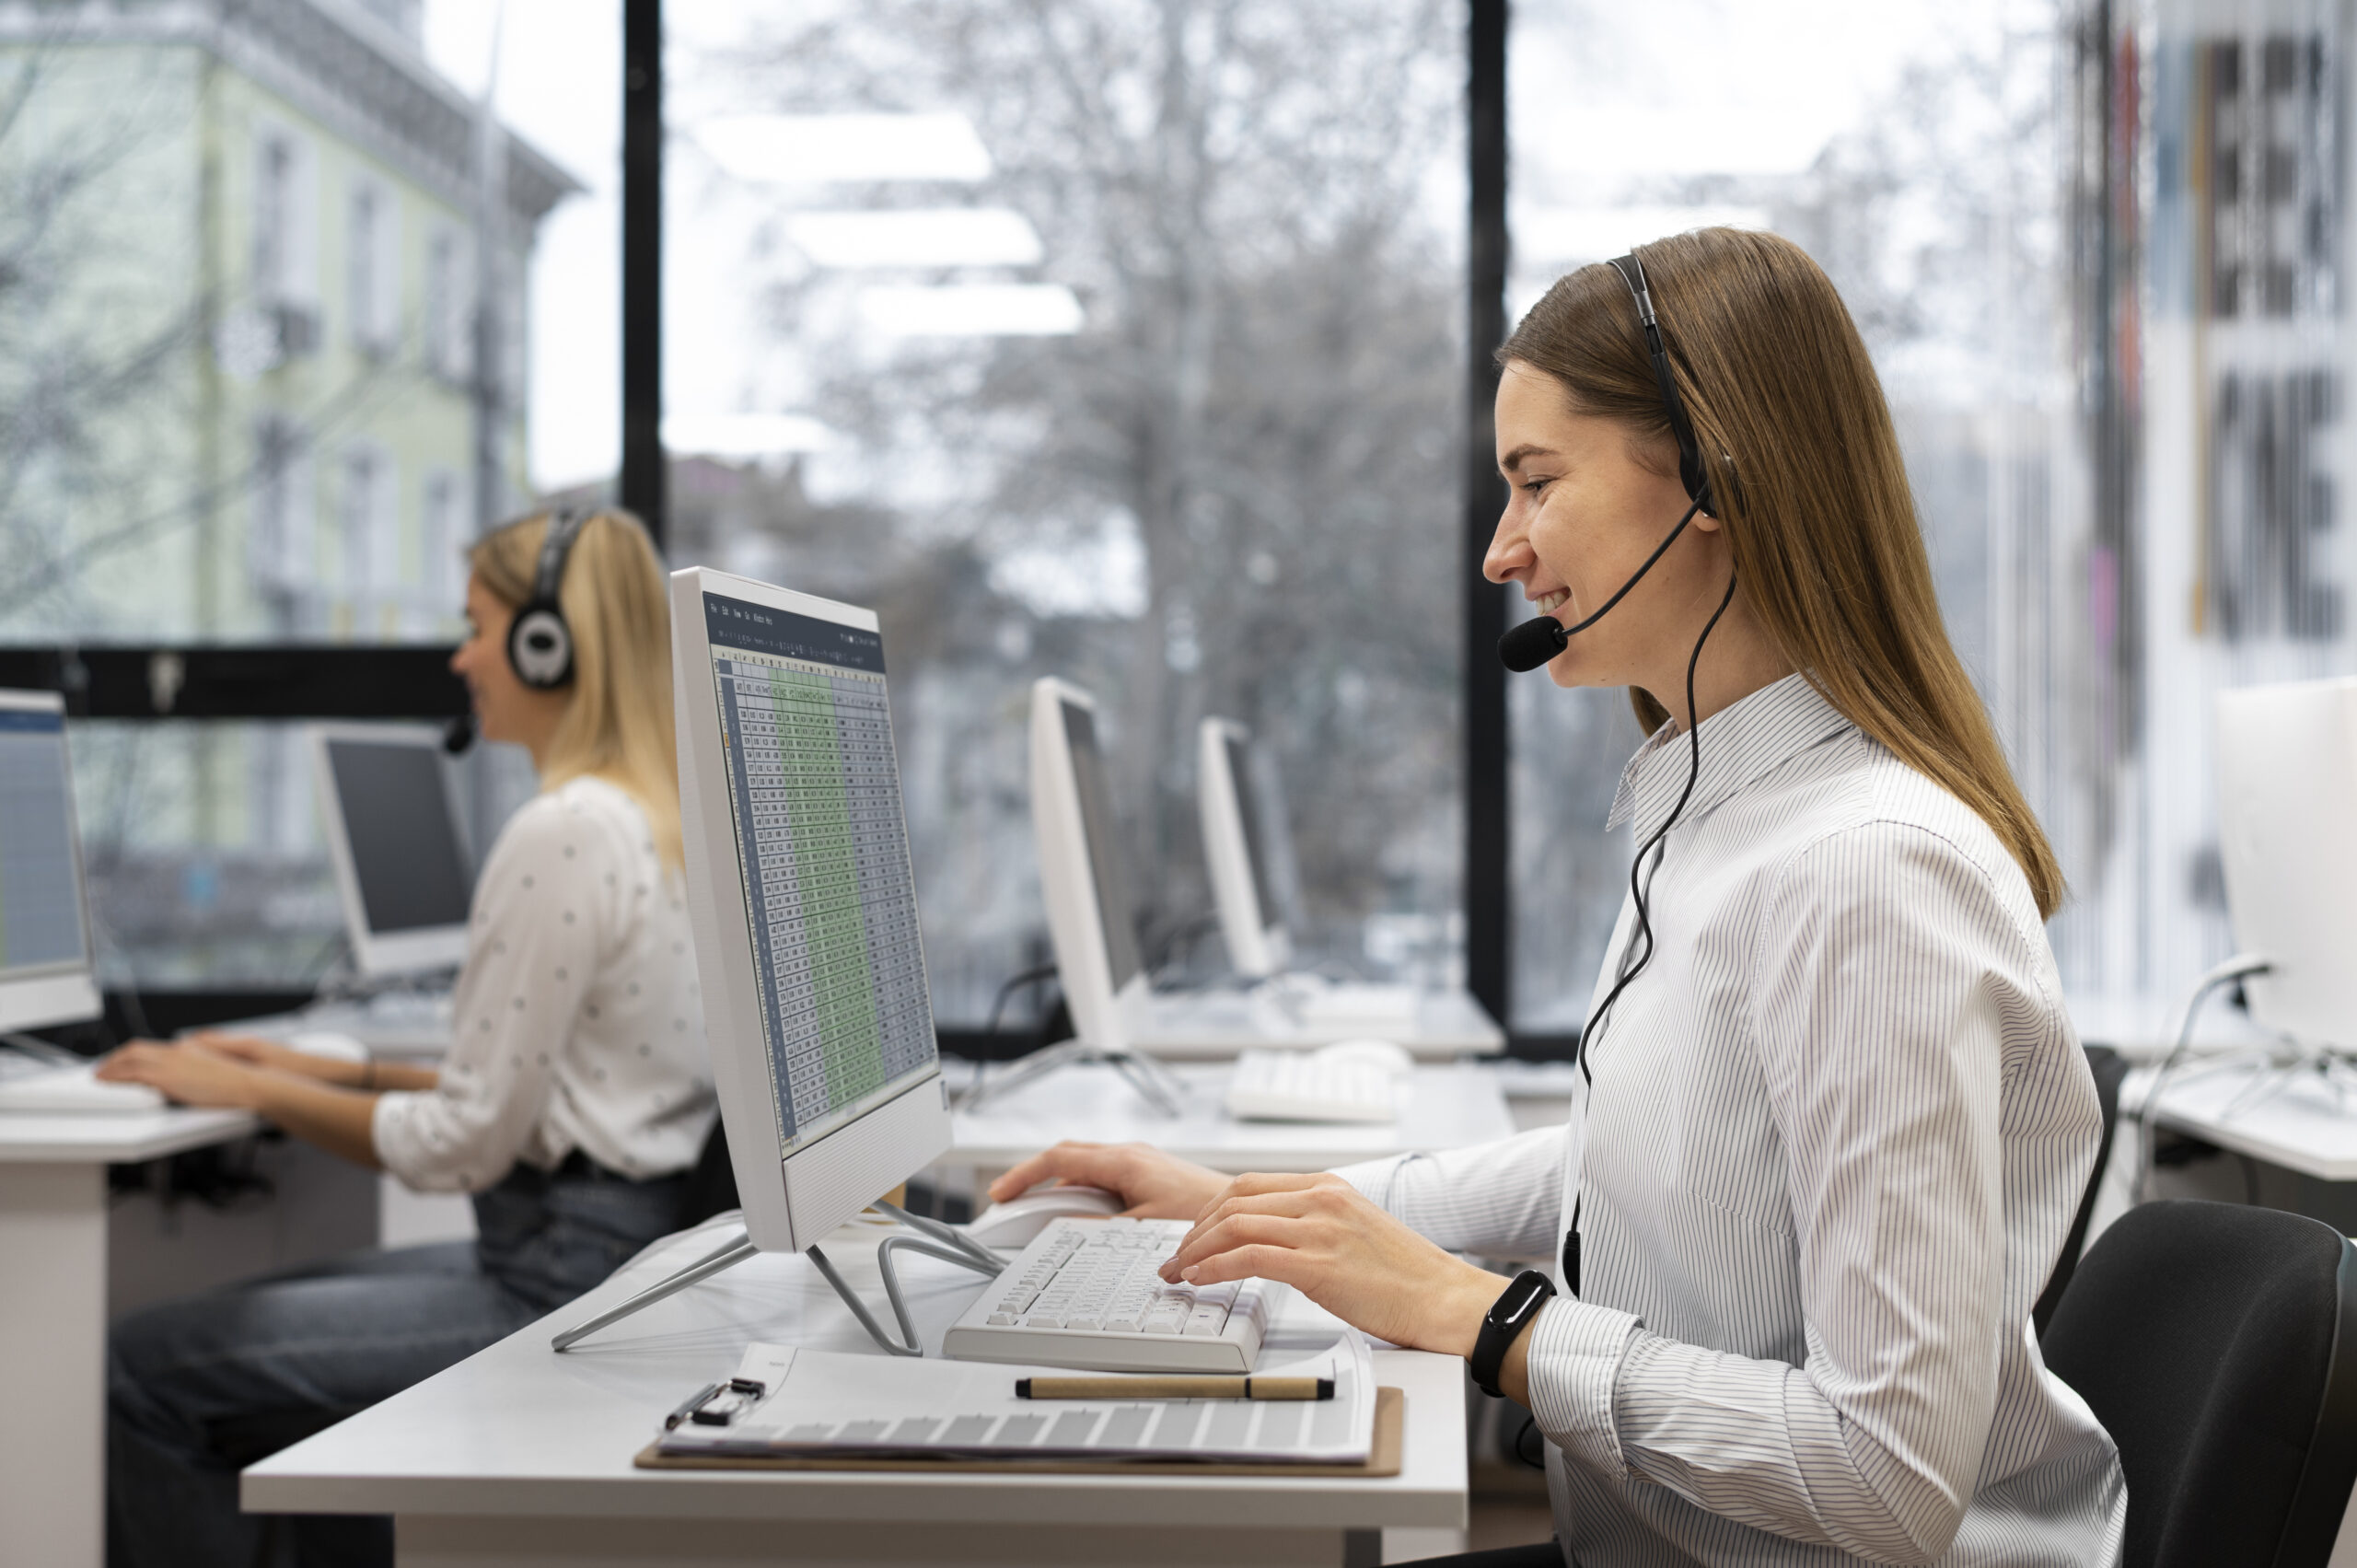 Call center training solutions